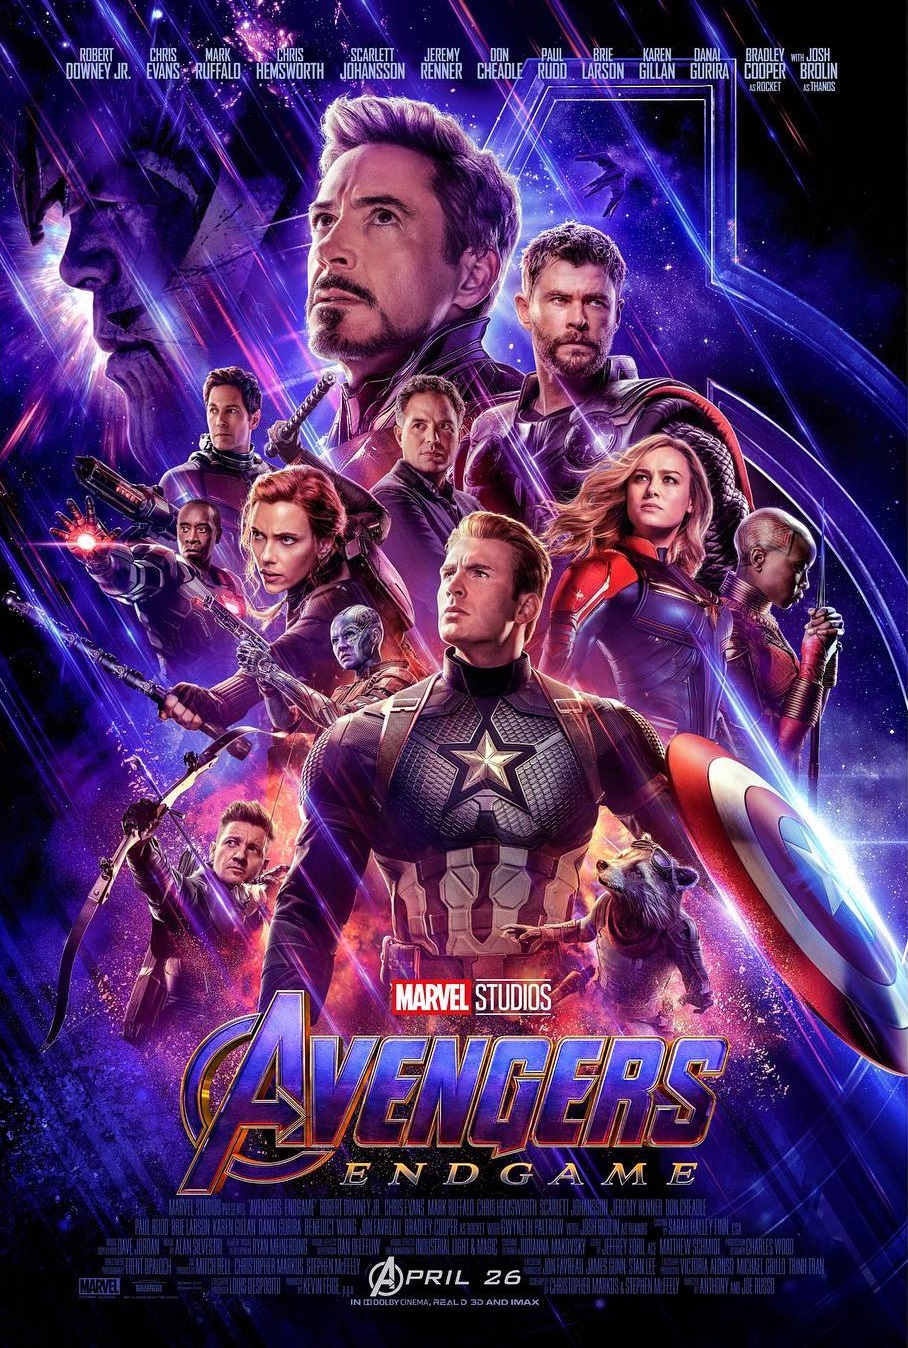 Avengers: Endgame Box Office Collection Day 5: Robert Downey Jr's film crosses the 200 crore mark